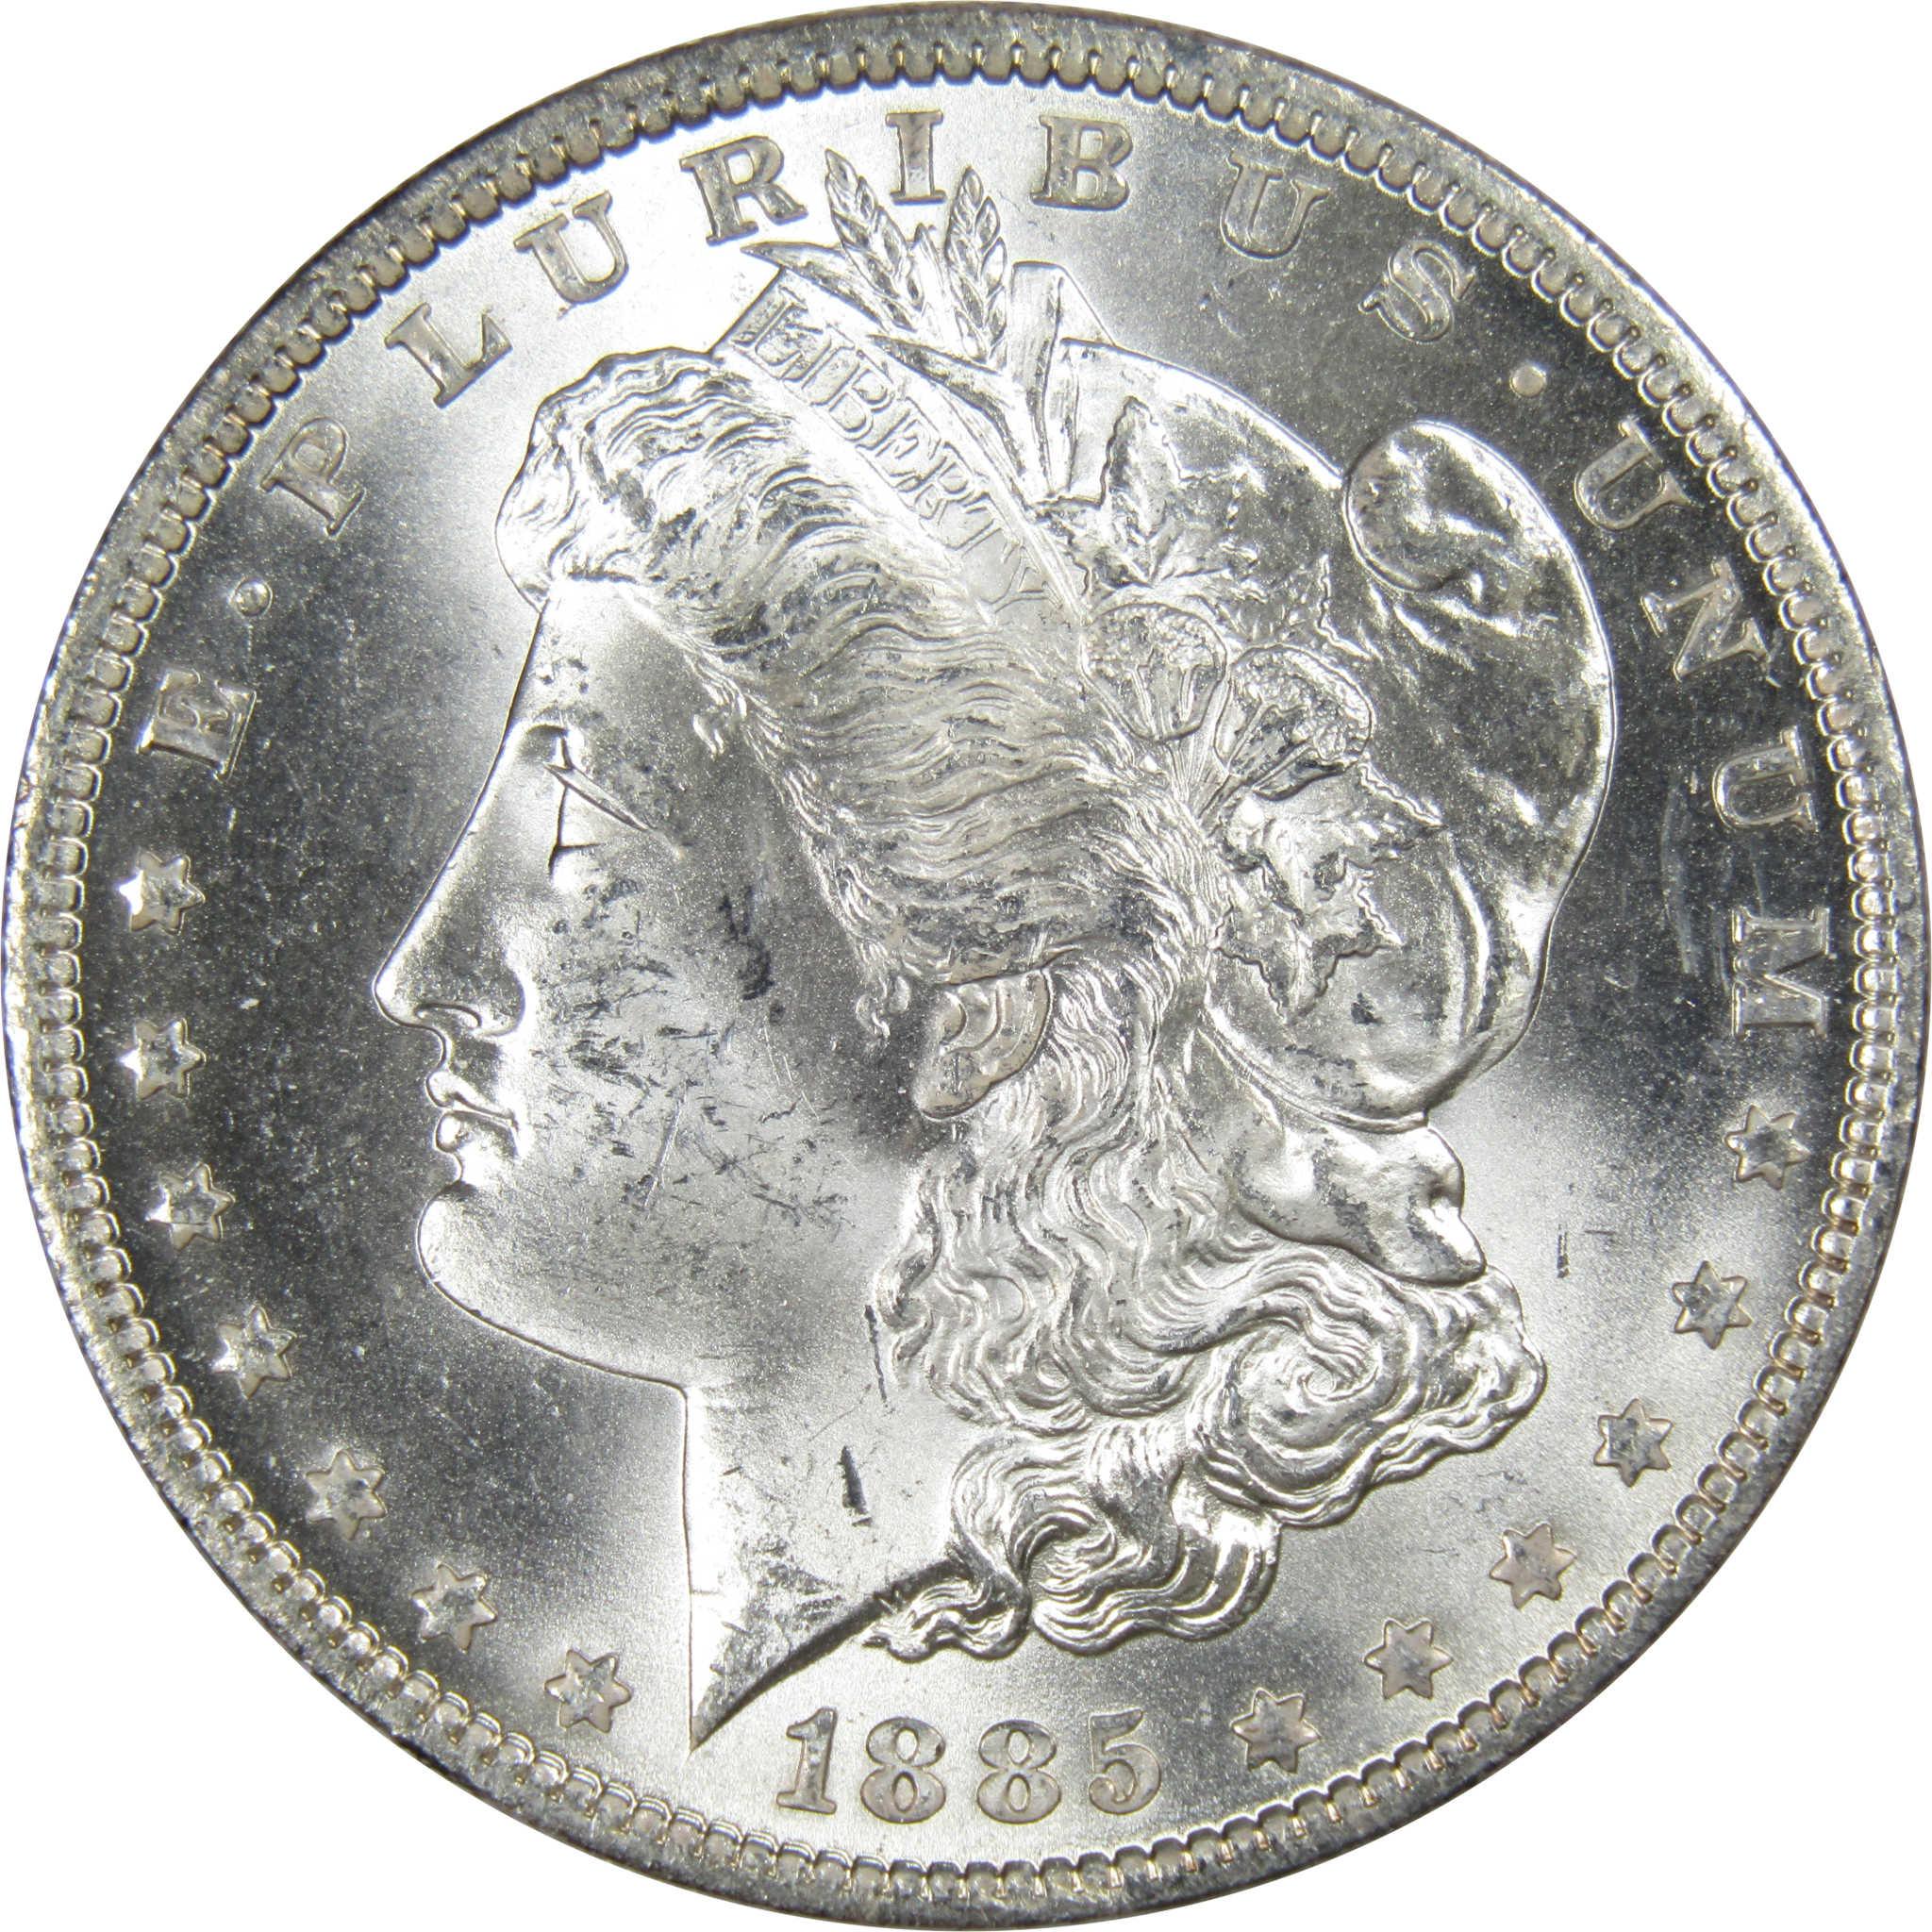 Sold at Auction: 1884-1891 Morgan Silver Dollar Coin Book Set 26 Coins